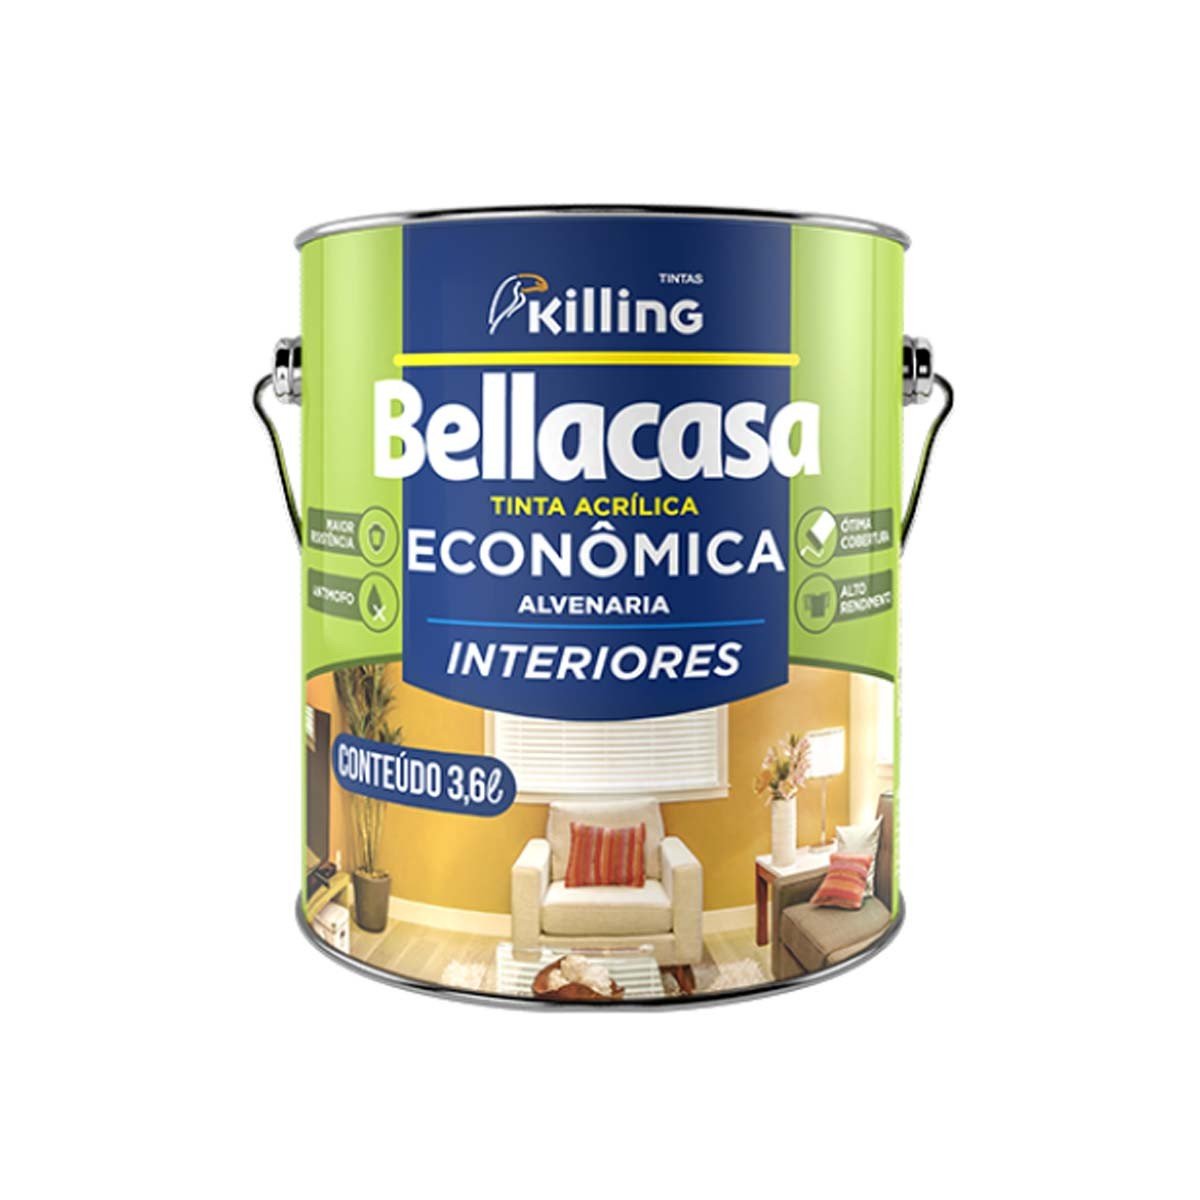 Tinta Acrilica Killing Bellacasa Economica Fosca Branca - 3,2 Lt